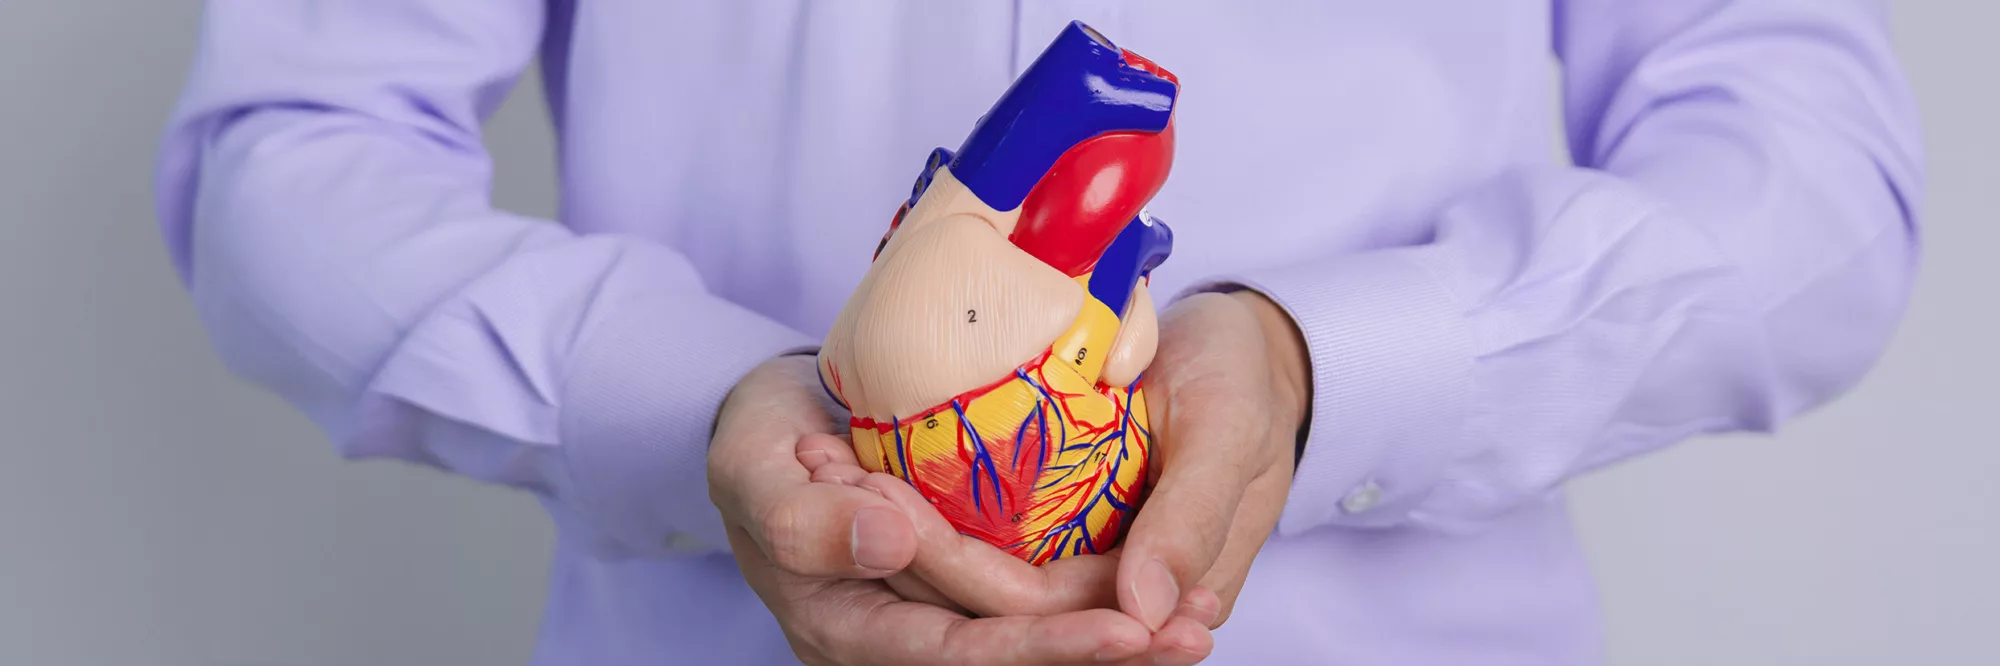 holding heart diagram model assembled